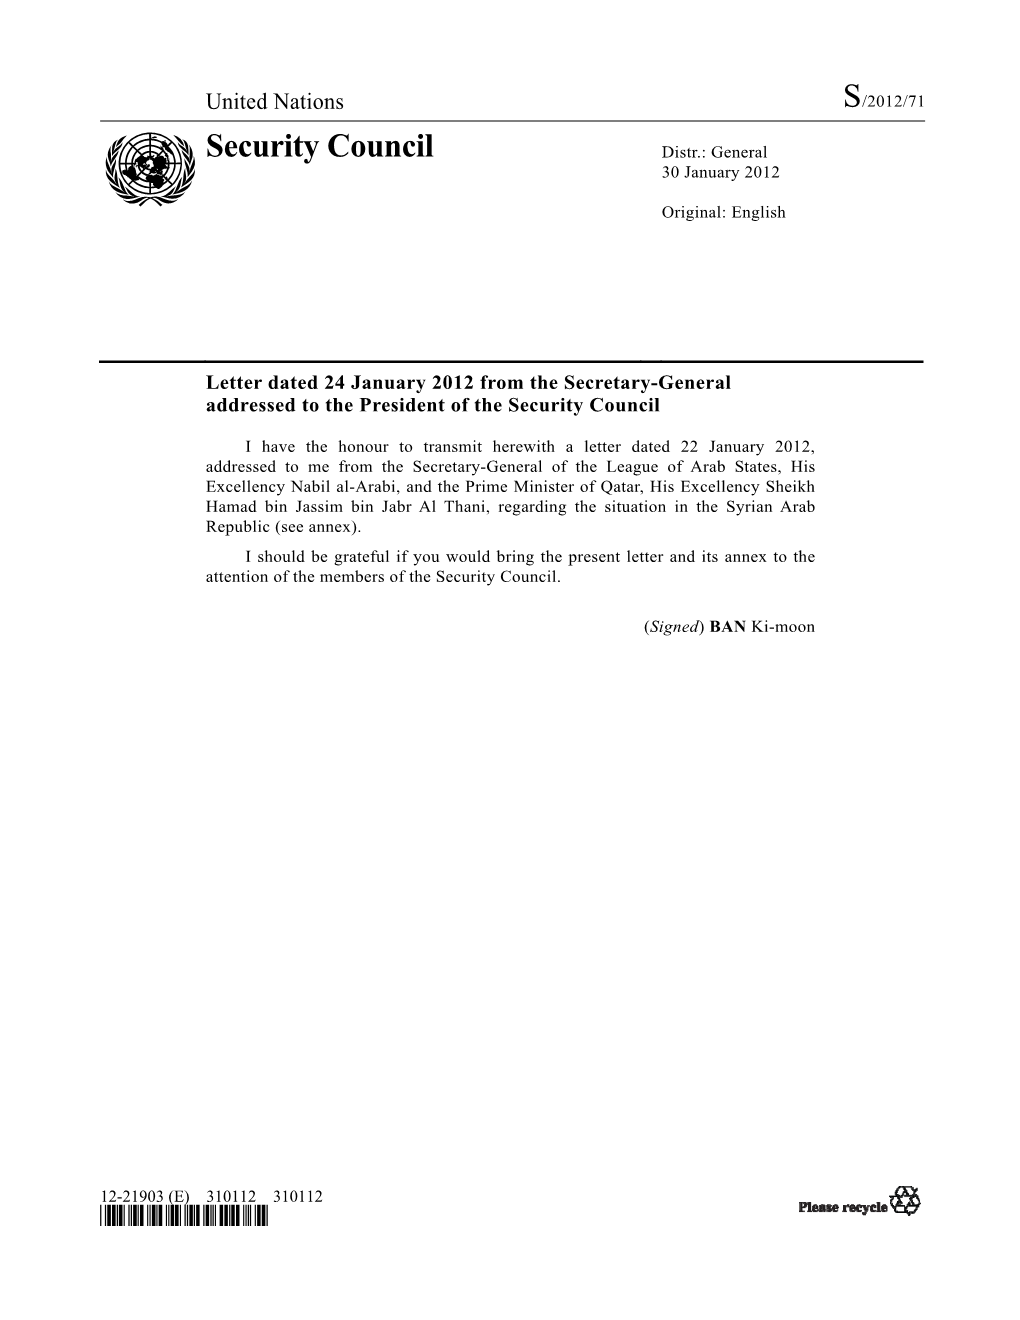 Security Council Distr.: General 30 January 2012